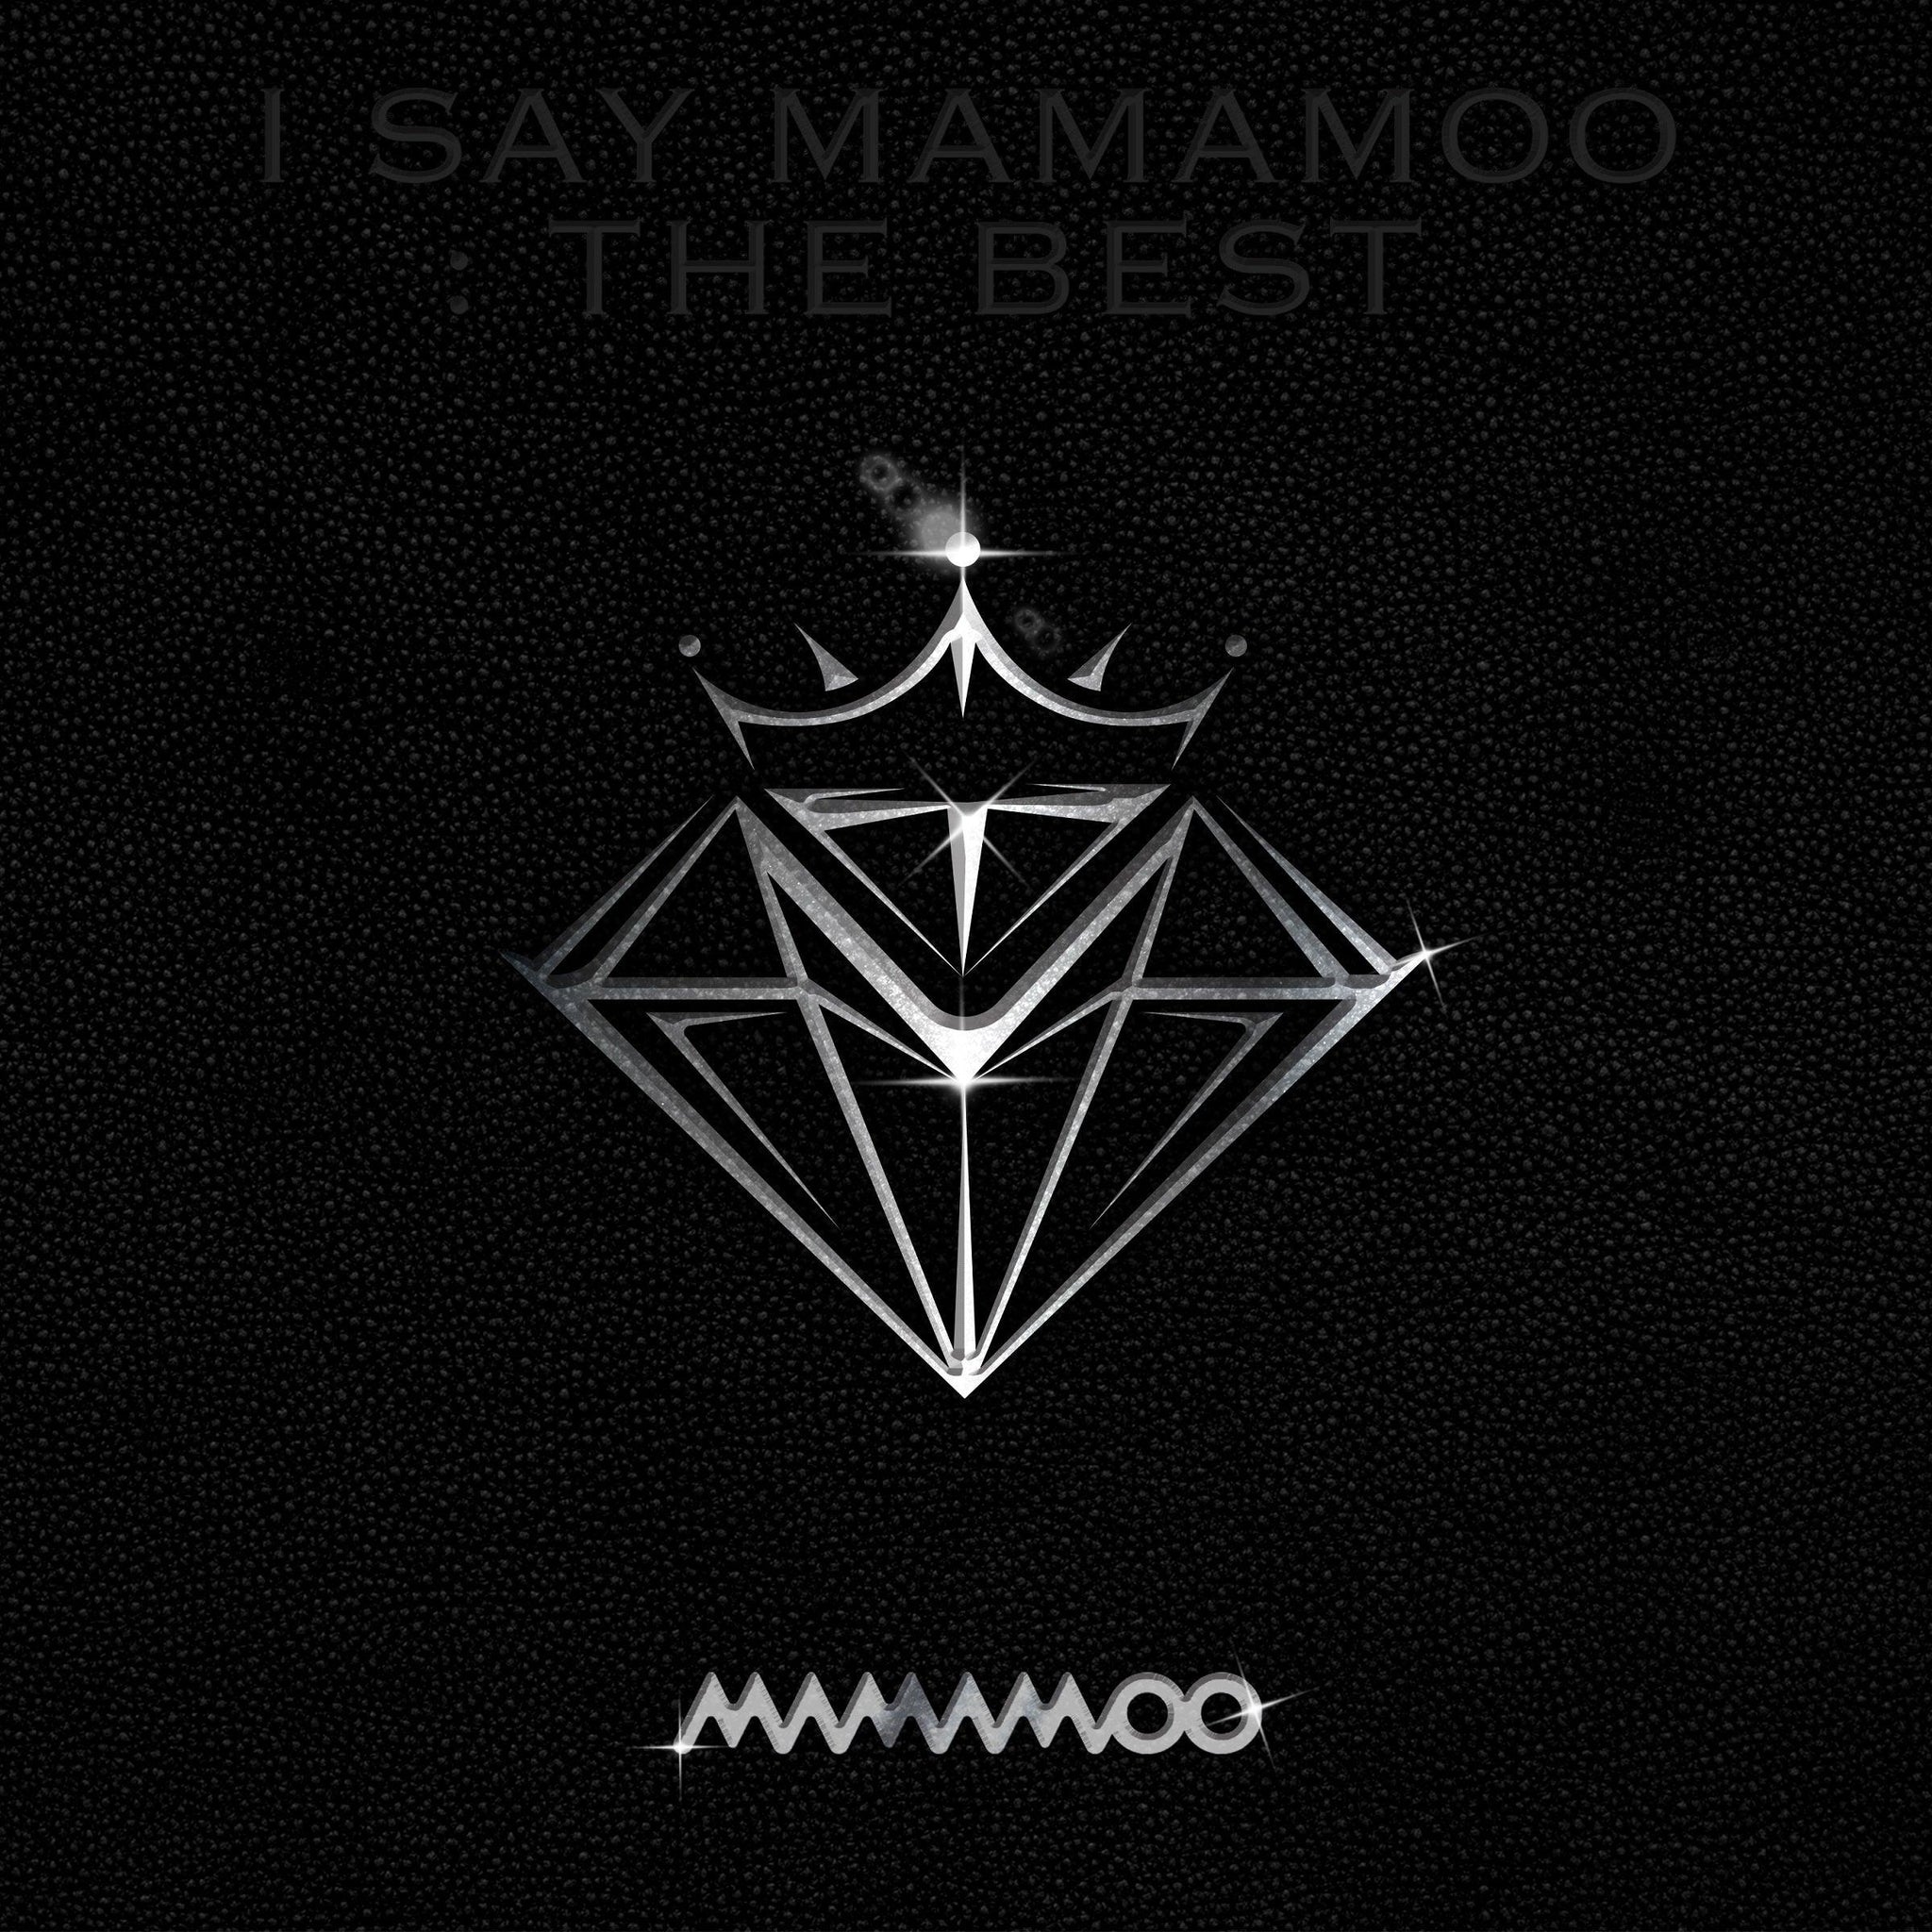 MAMAMOO BEST ALBUM 'I SAY MAMAMOO : THE BEST' COVER